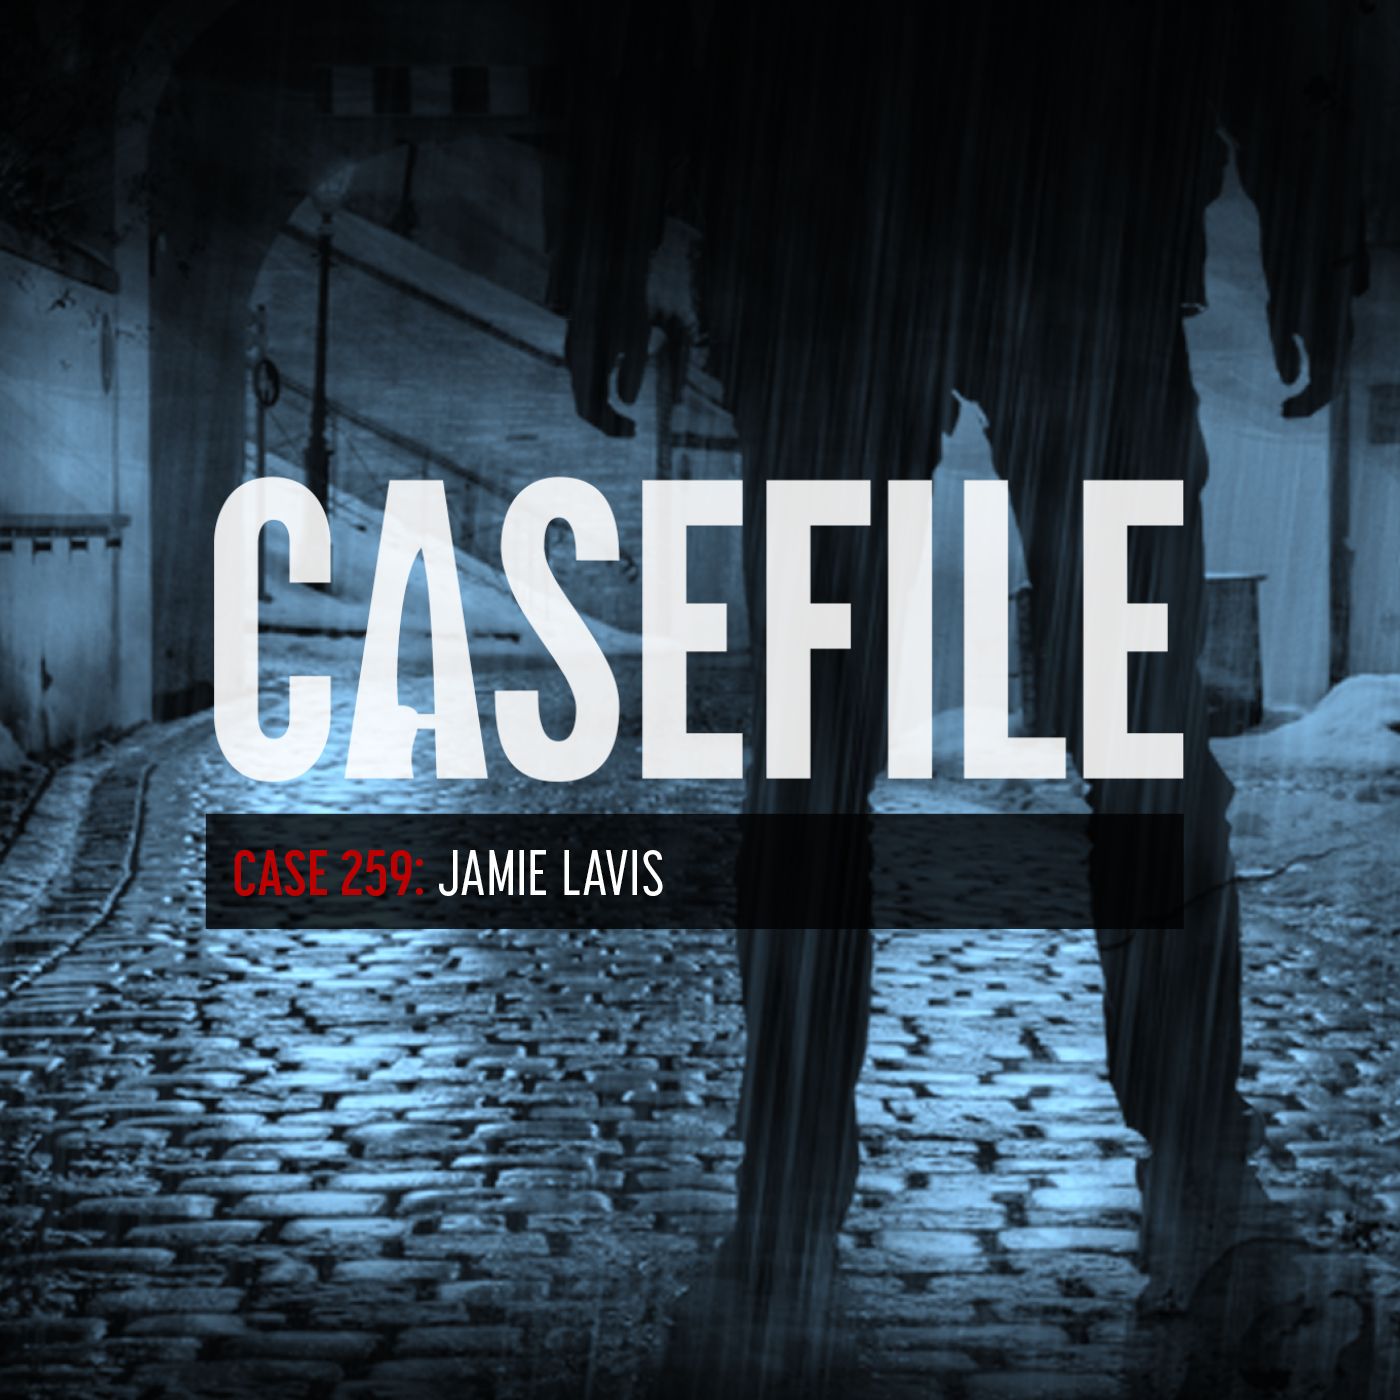 303: Case 259: Jamie Lavis